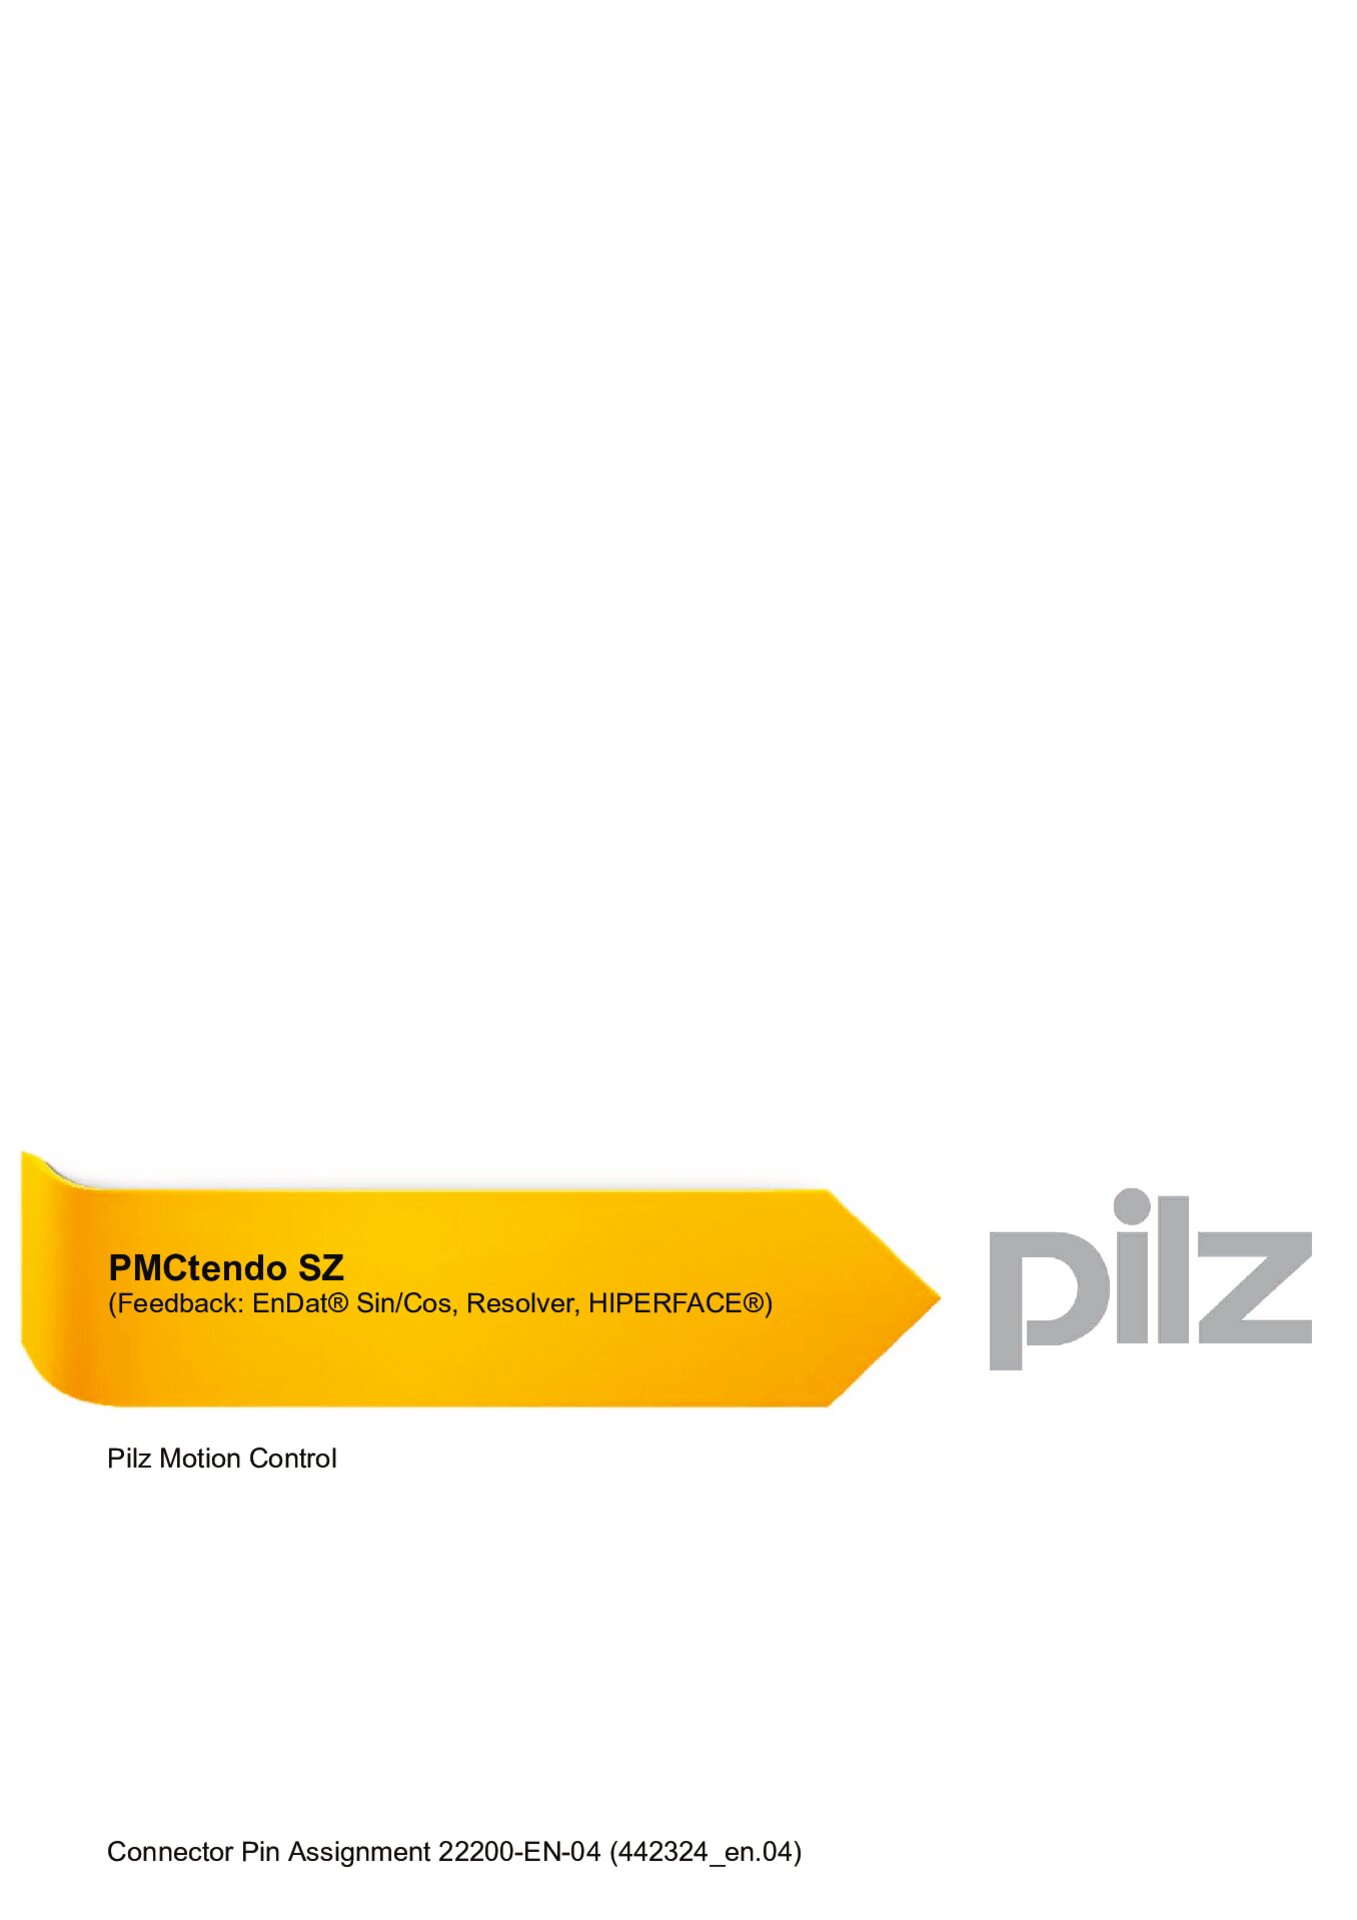 Connection plan PMCtendo SZ Feedback analog (Pilz ID 22200-EN-02)